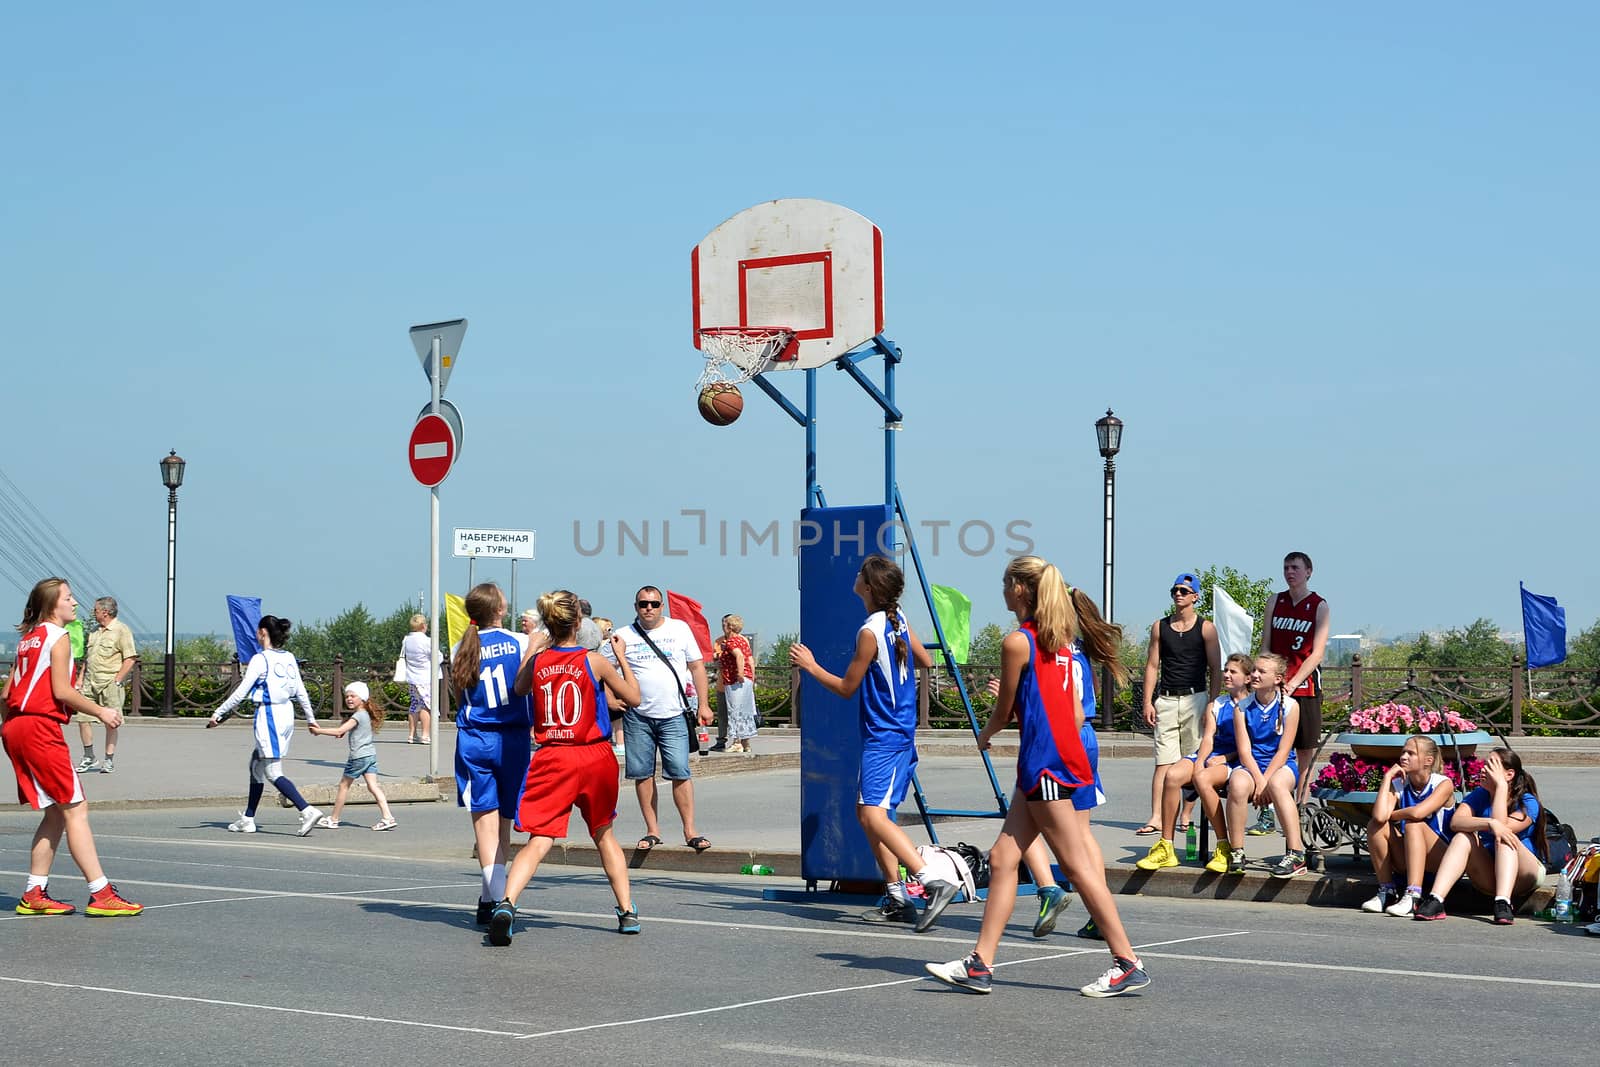 Street basketball among women's teams on the street in Tyumen, Russia